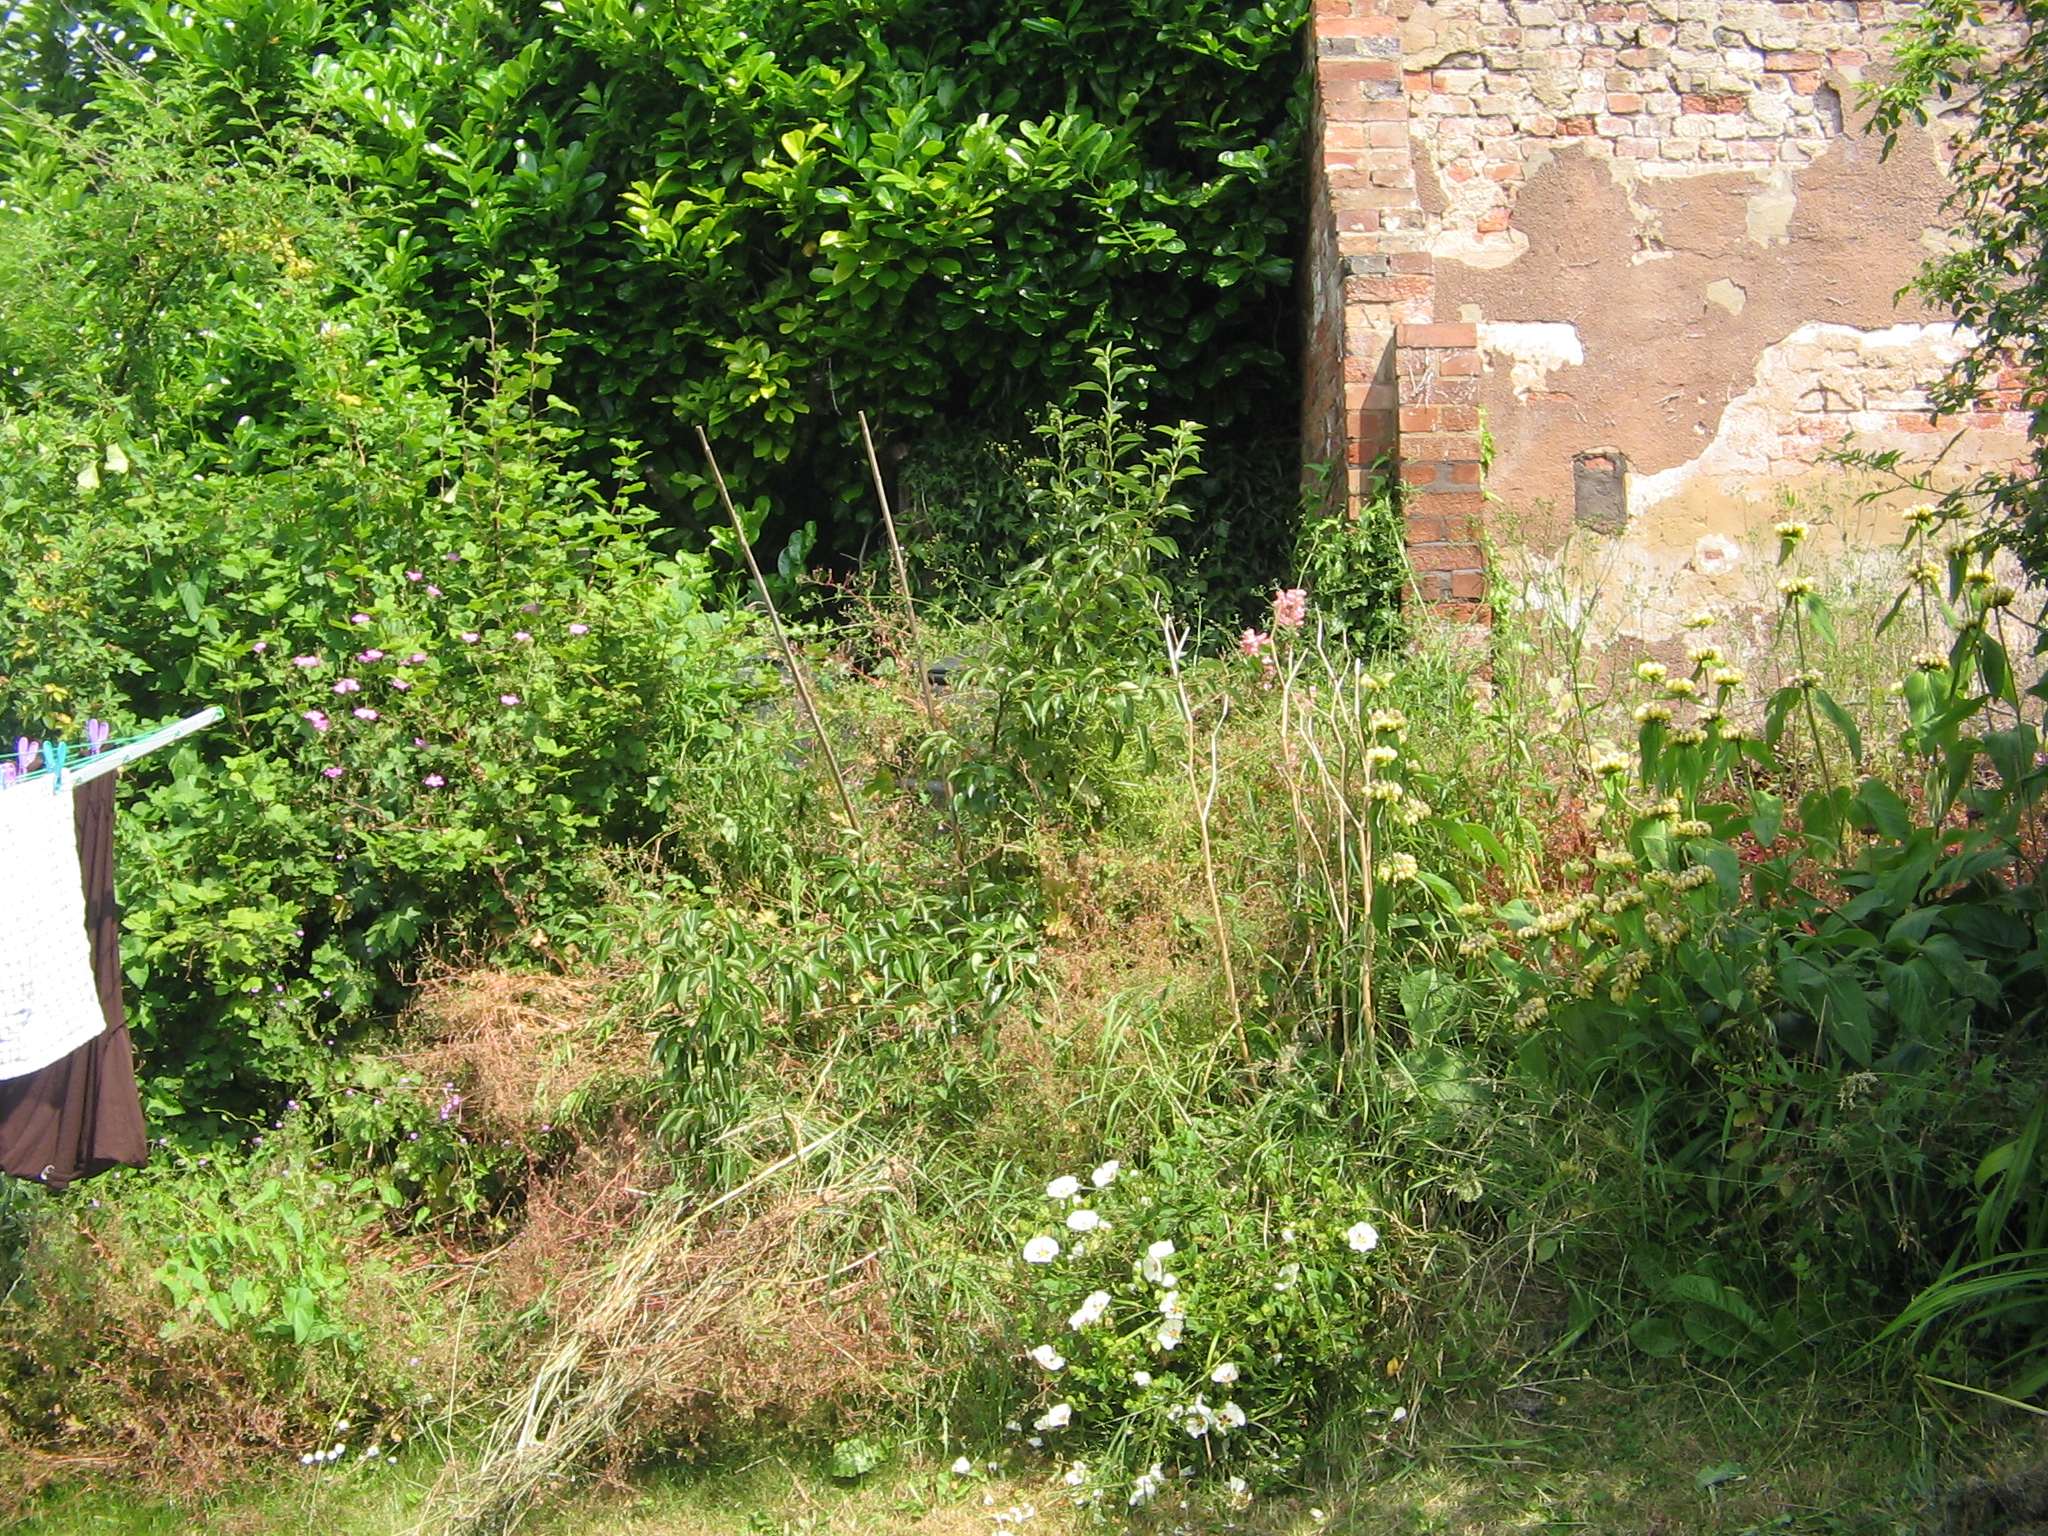 How can you clear an overgrown garden?